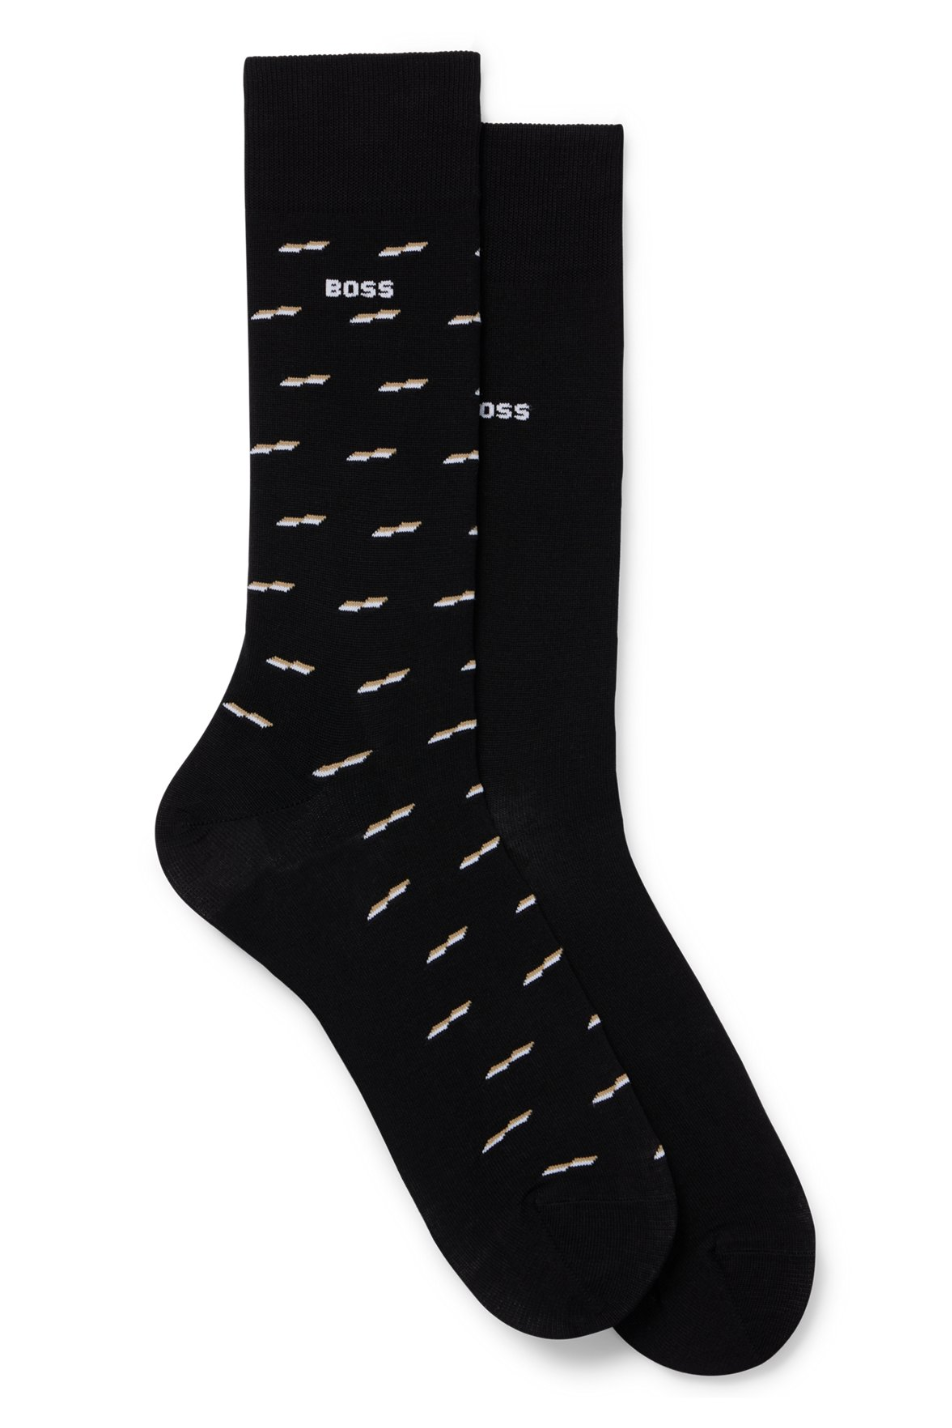 BOSS 2 Pack Men's Minipattern Socks